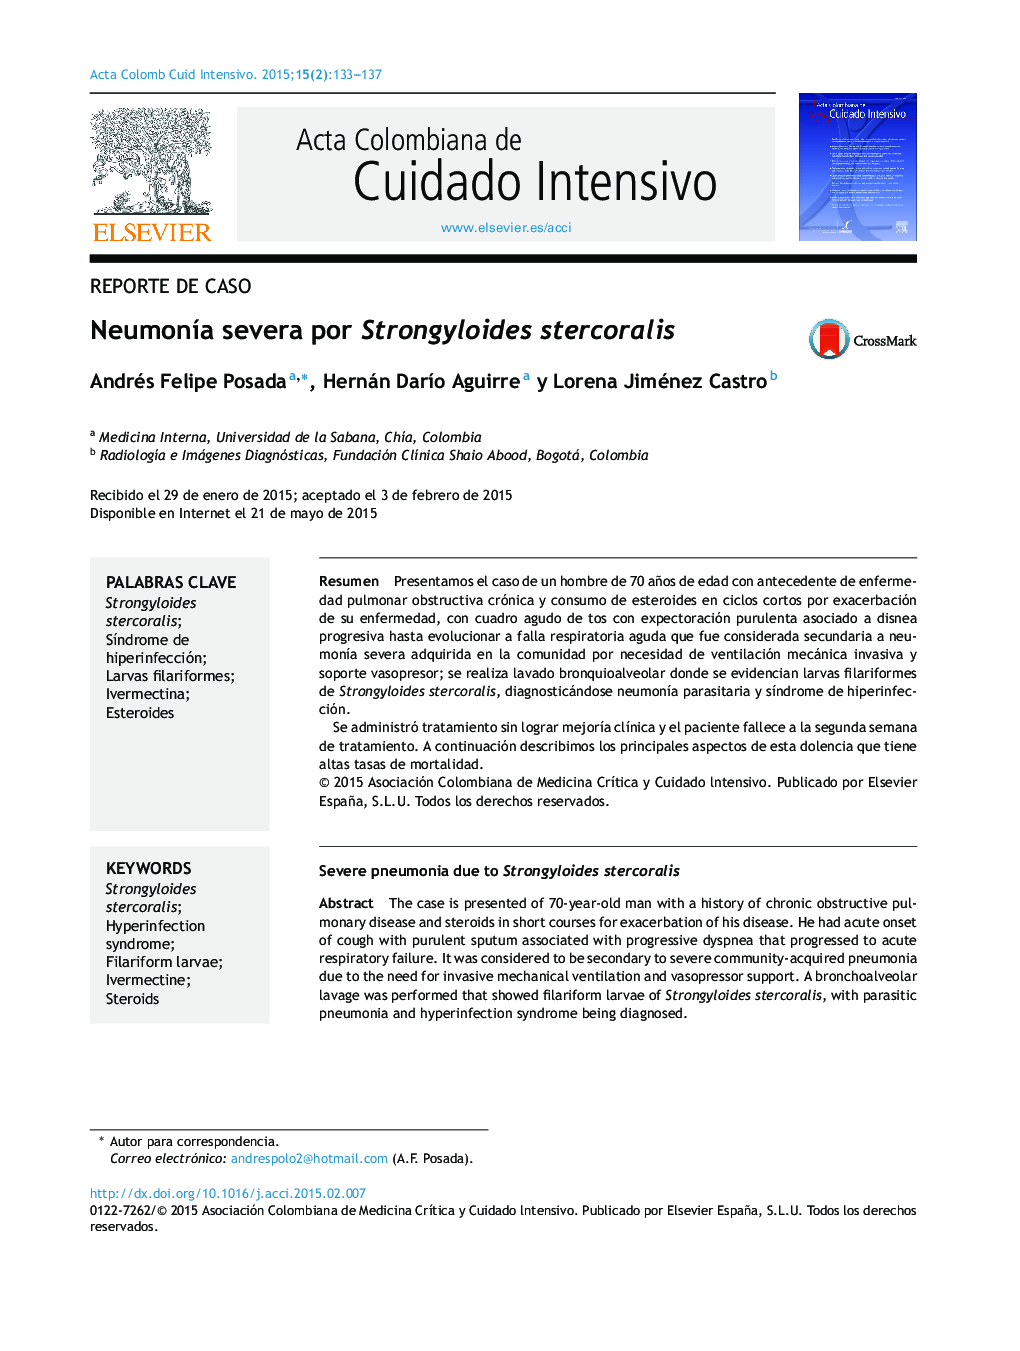 NeumonÃ­a severa por Strongyloides stercoralis